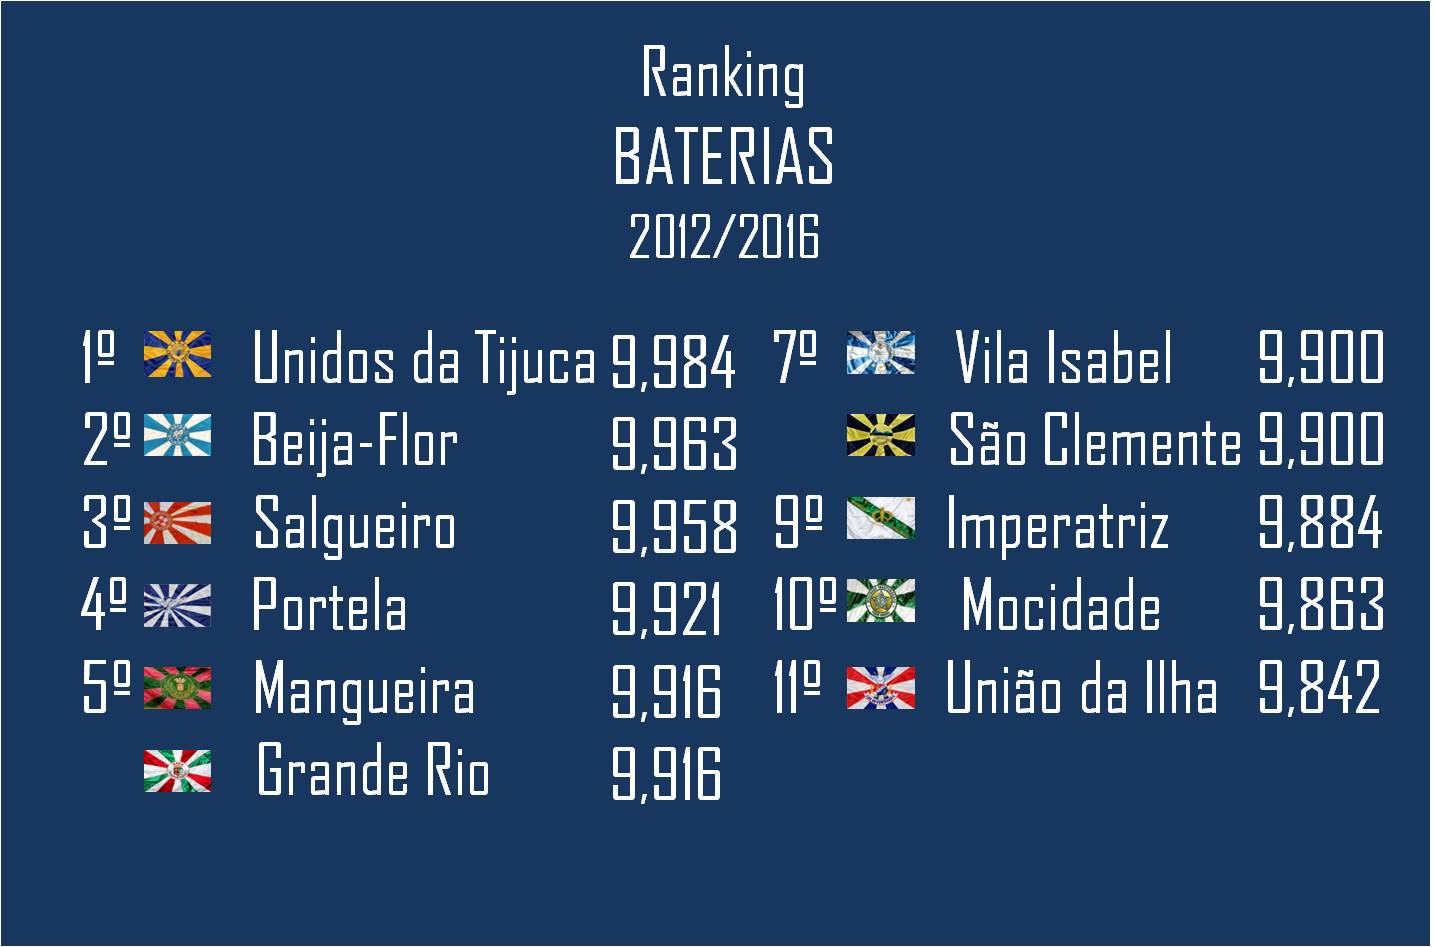 Ranking de baterias 2002 - 2016